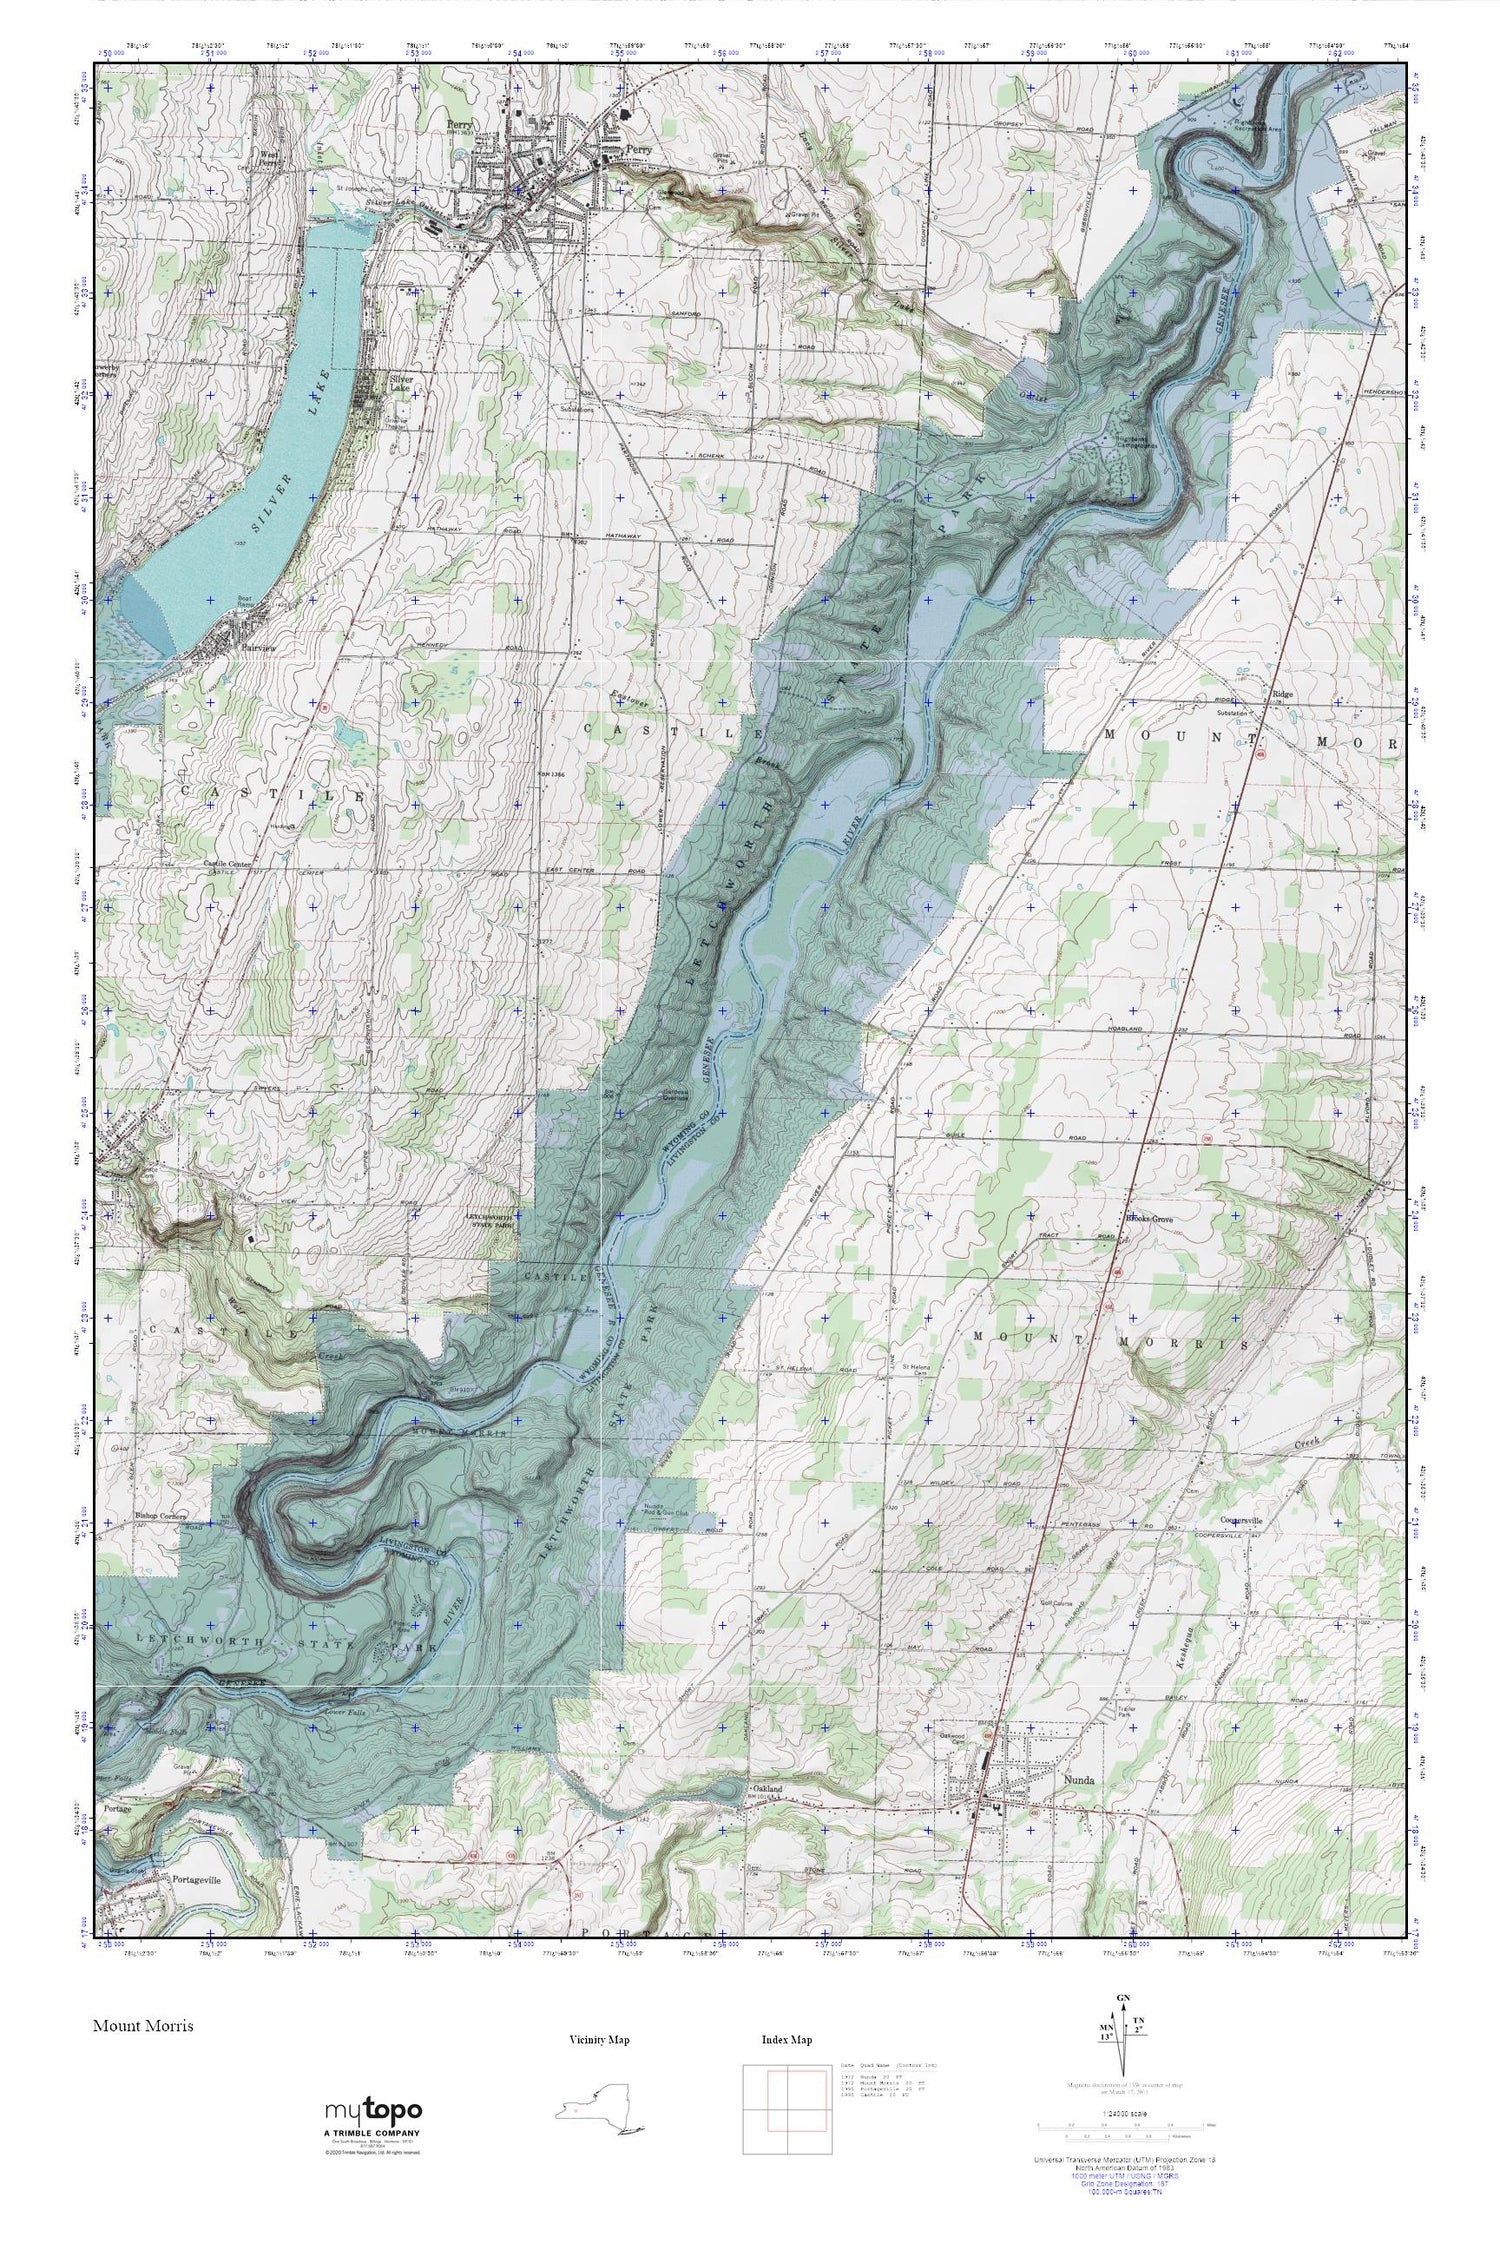 Letchworth State Park MyTopo Explorer Series Map Image